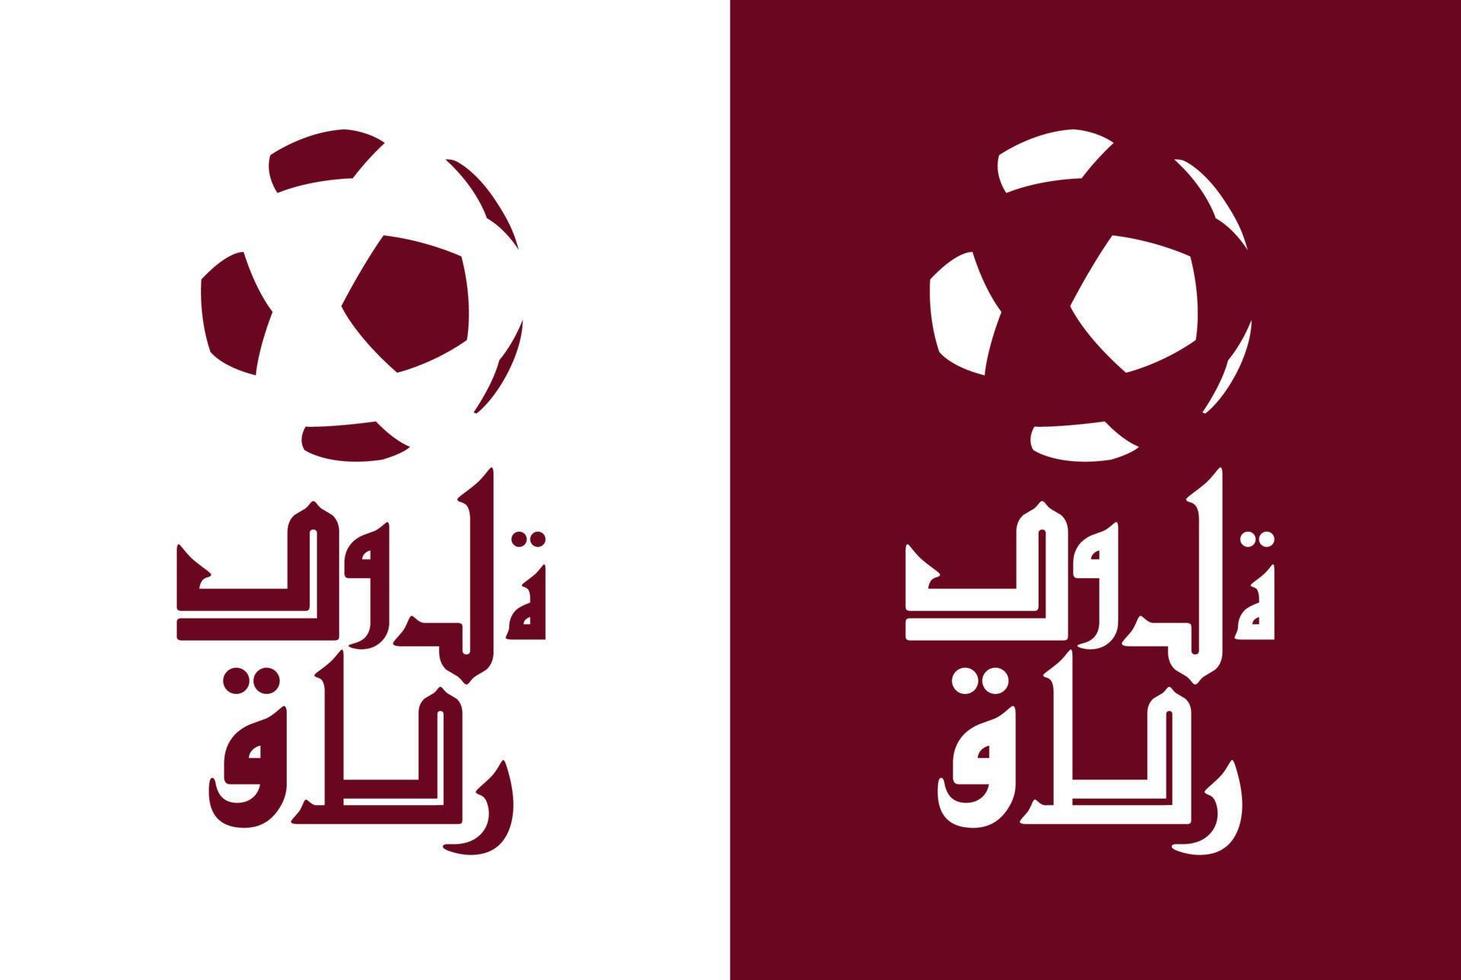 logo du tournoi de football 2022, ballon de football, sport, signe de concept de drapeau, symbole vecteur